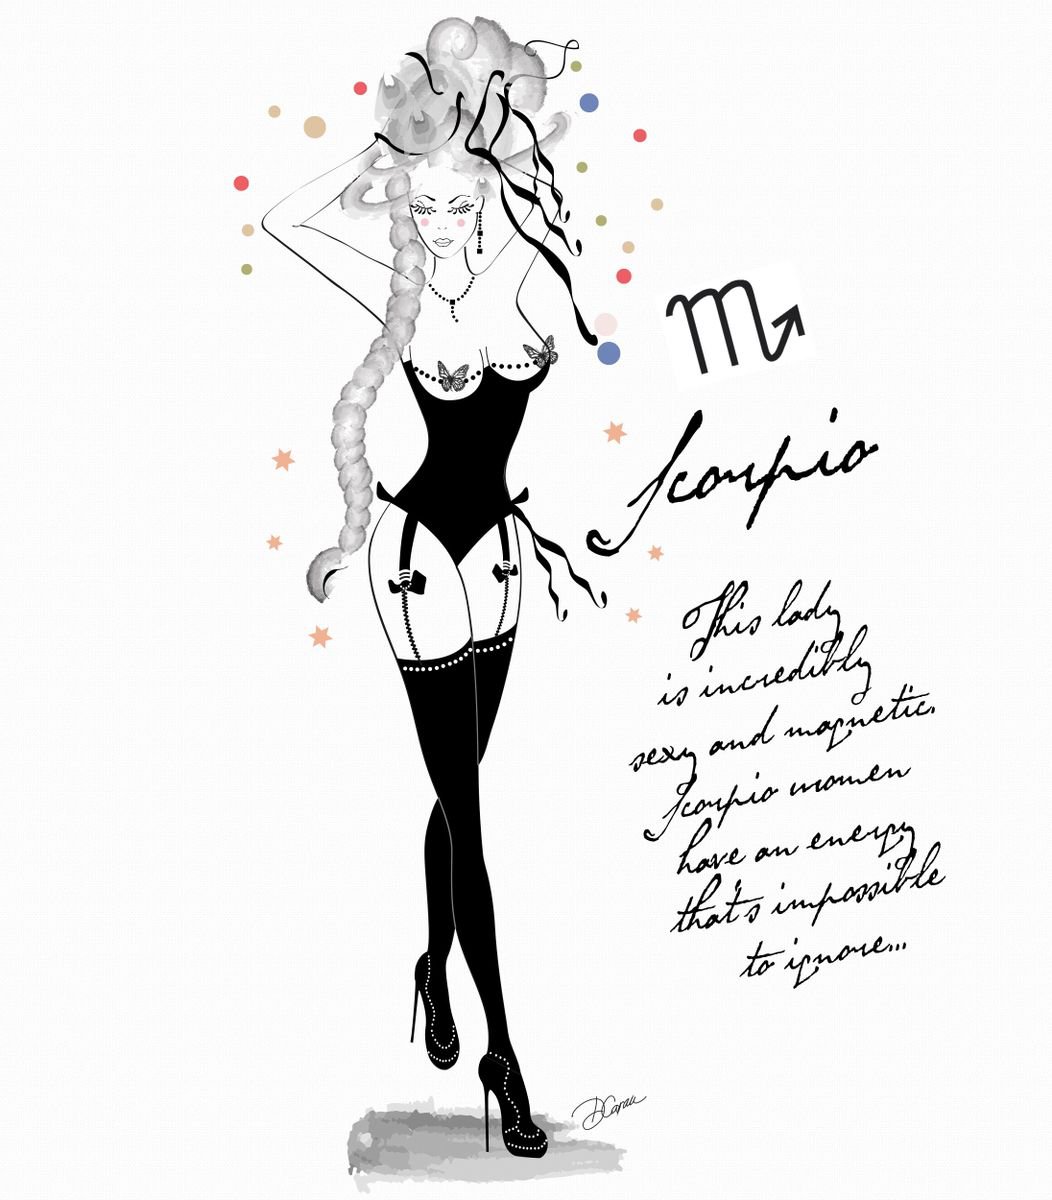 Scorpio - Scorpione - Astrology - Zodiac - AstroPinup - Pinup Girl - Erotic - Birthday - G... by Artemisia